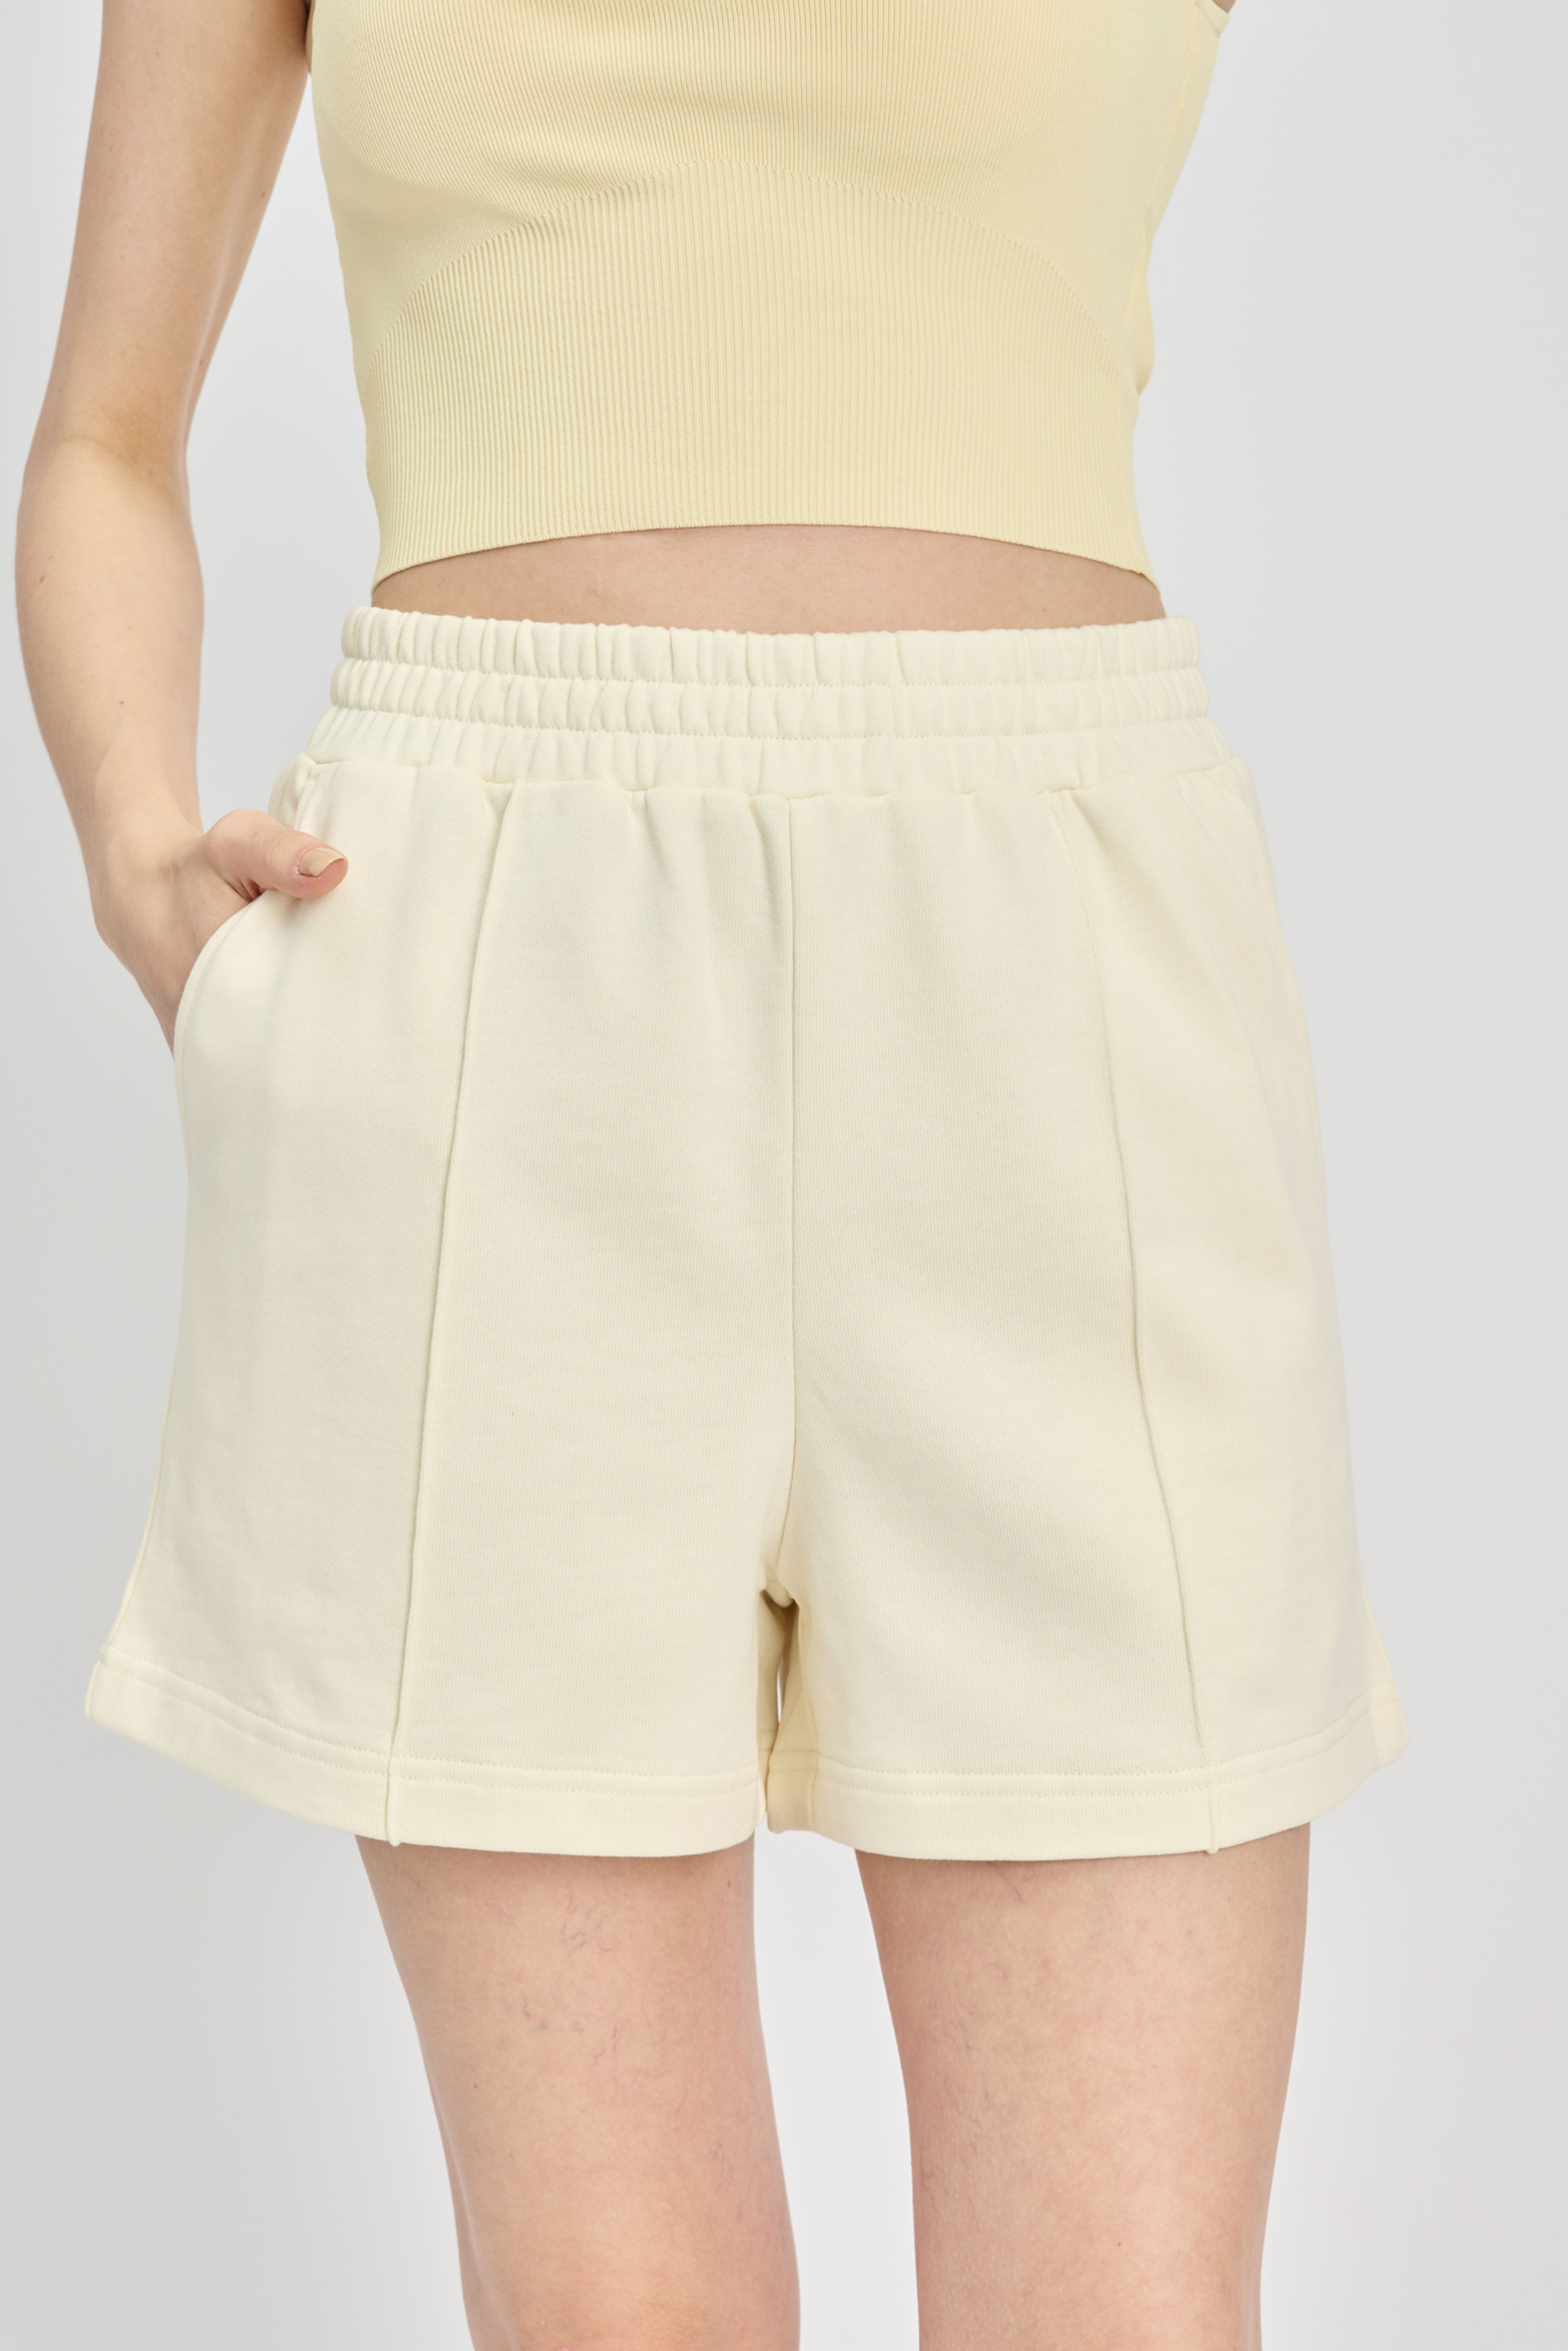 VENICE cotton shorts (Light yellow)